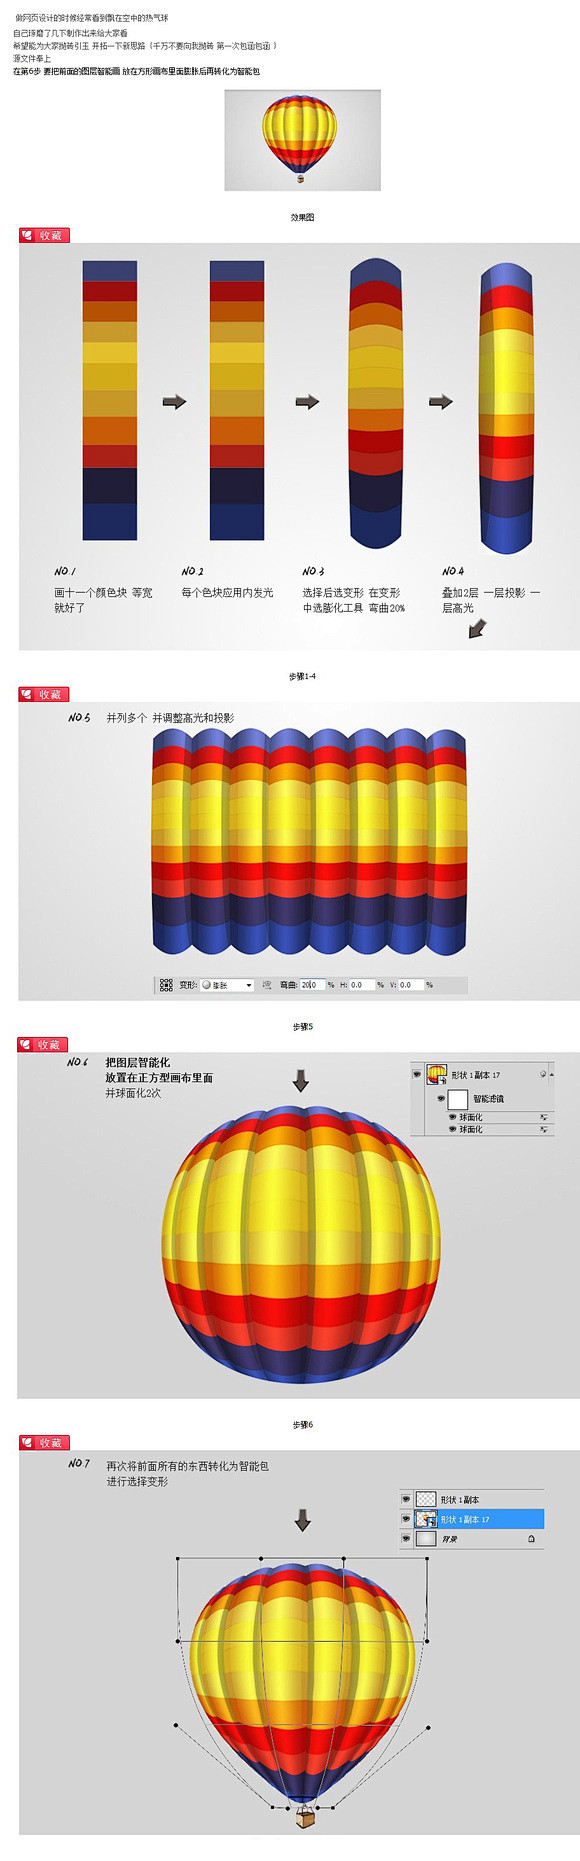 PS制作一个炫彩的热气球.jpg - S...